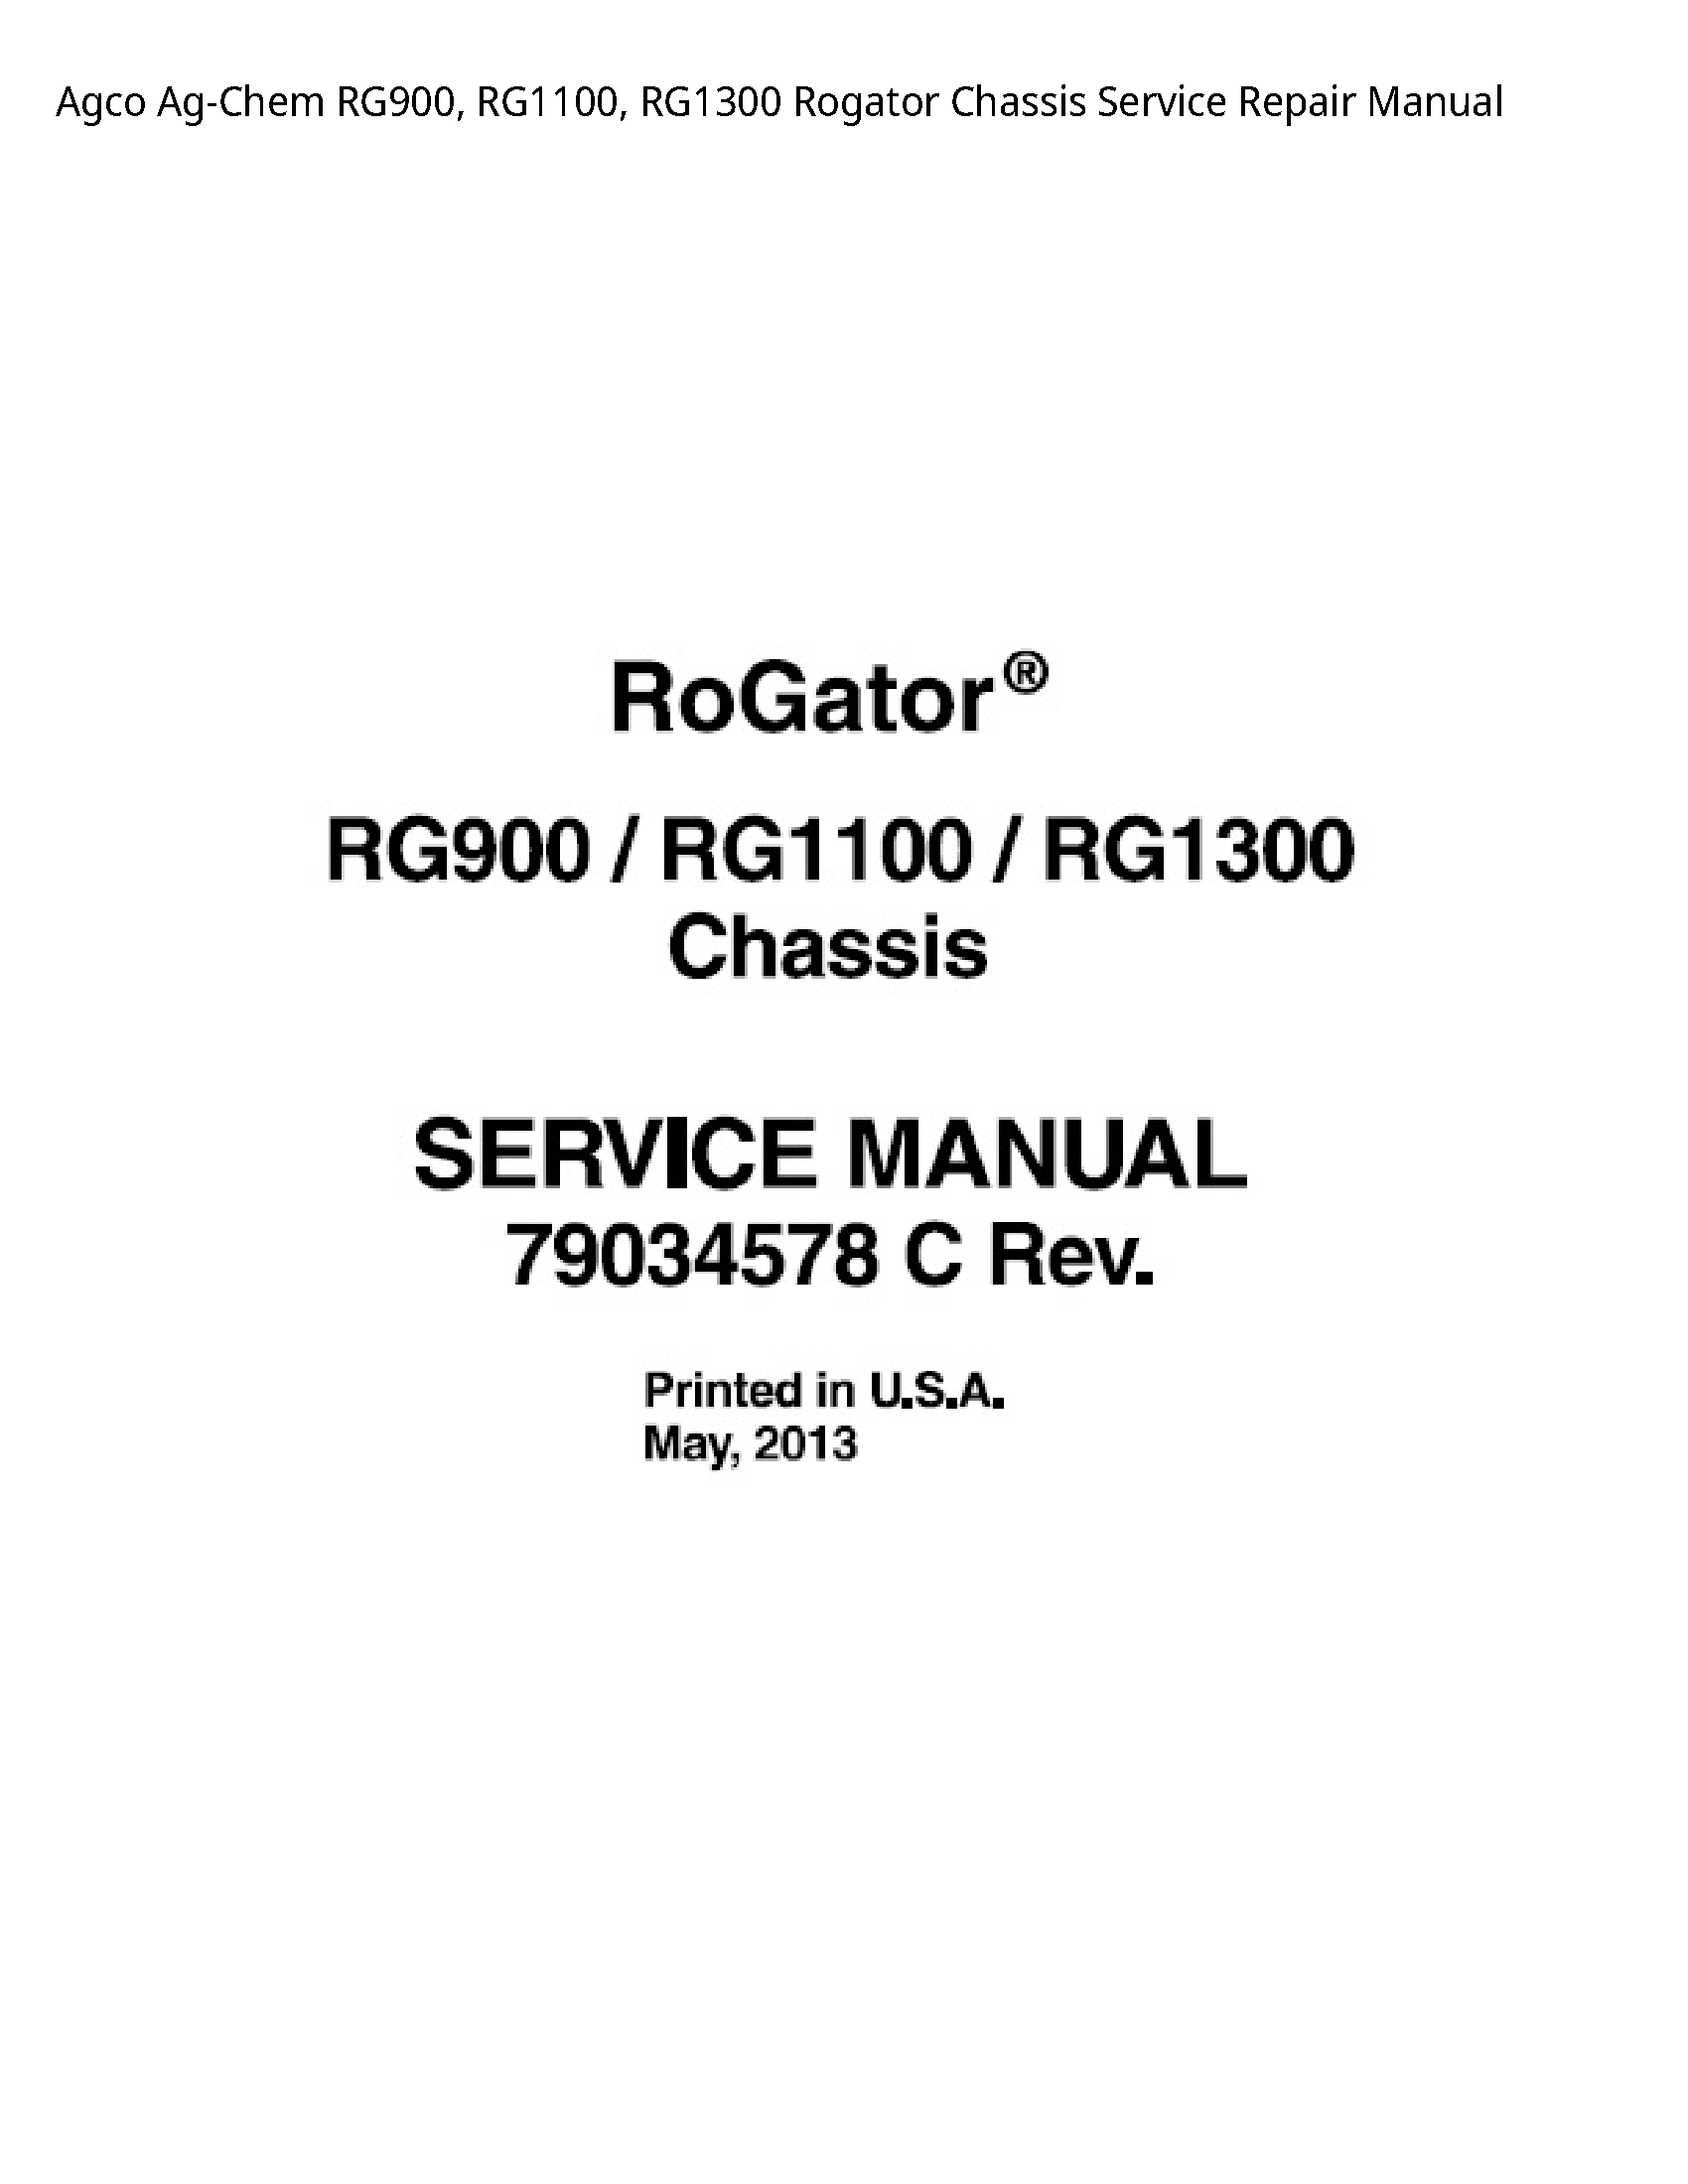 AGCO RG900 Ag-Chem Rogator Chassis manual